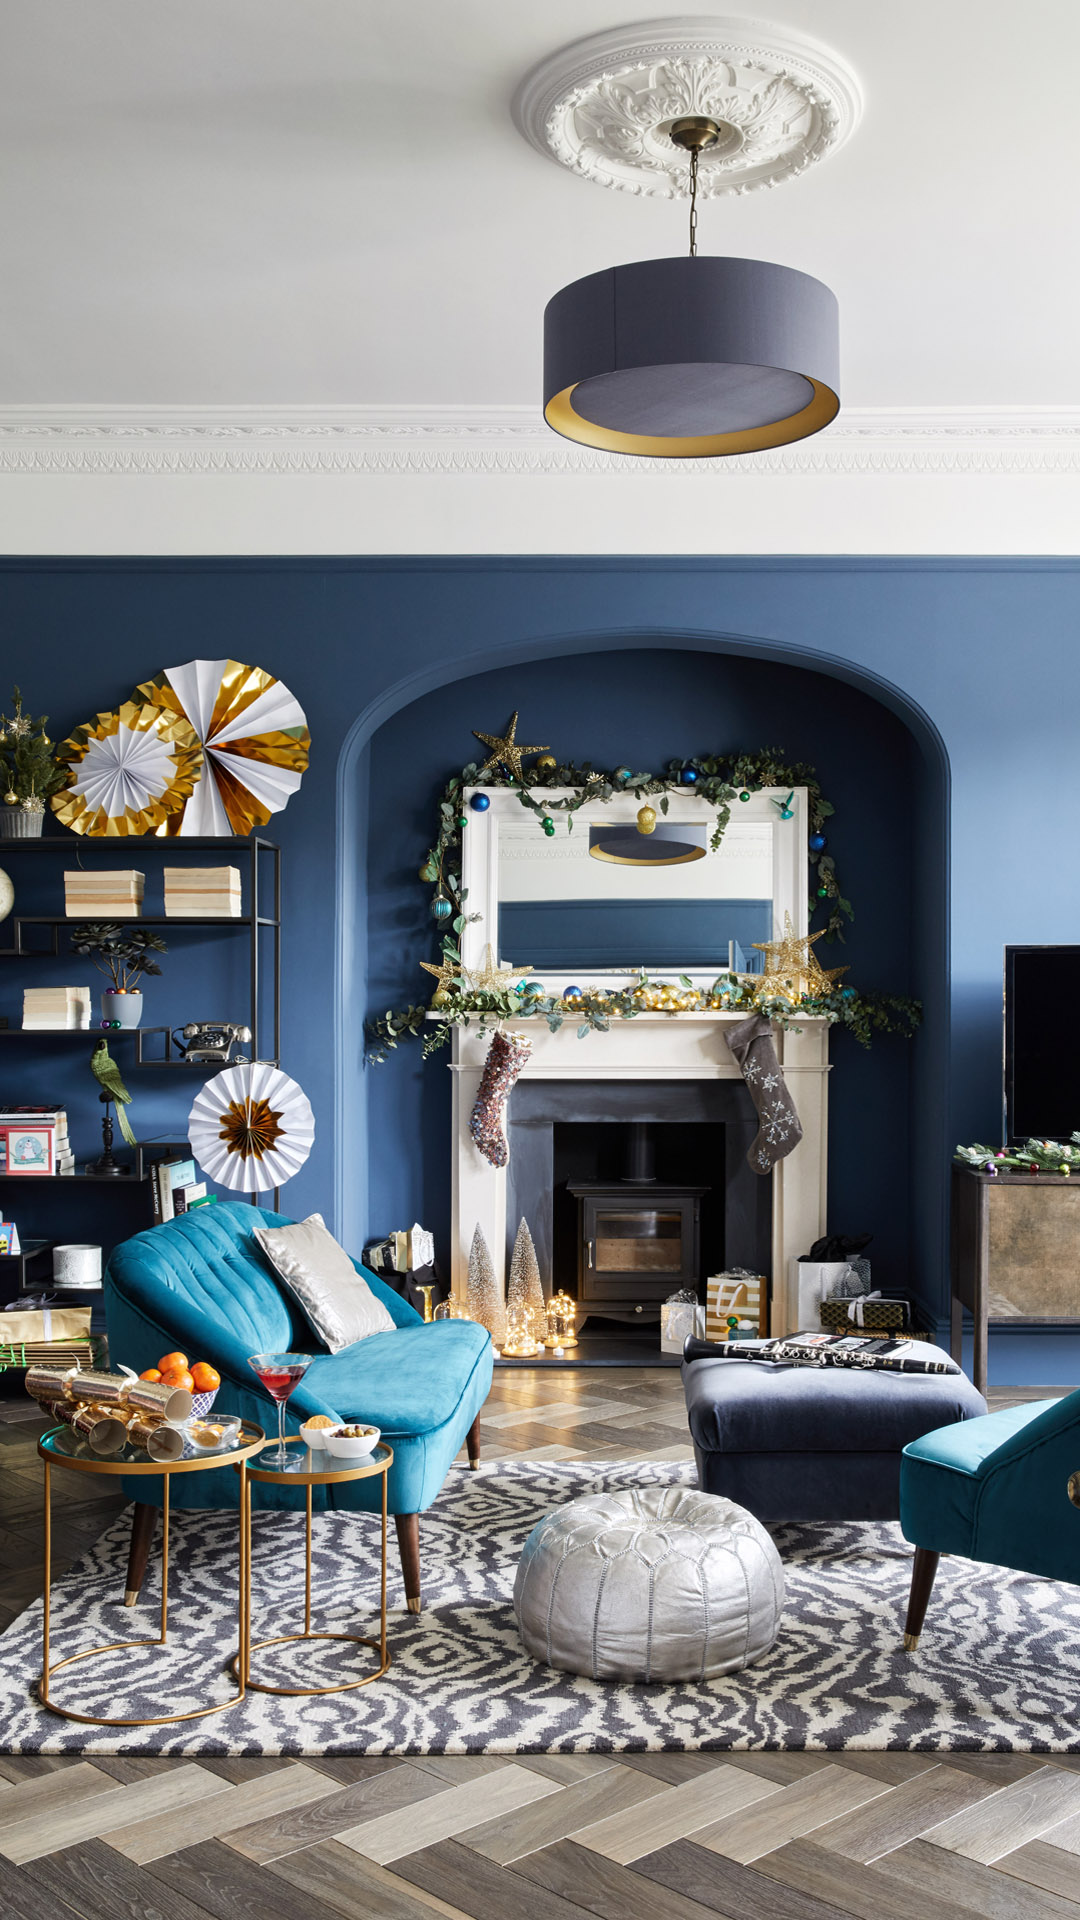 Blue wall living room blue sofa paper decorations Christmas Stockings fireplace mantel mantelpiece rug Christmas